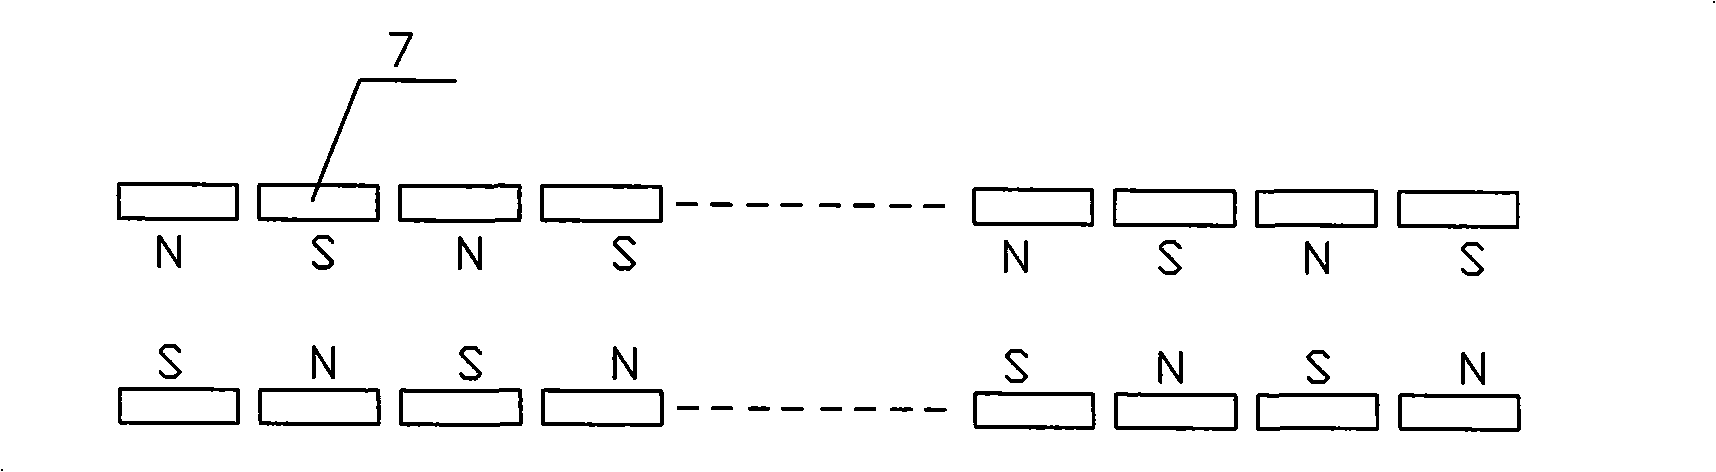 U-shaped straight line servo motor